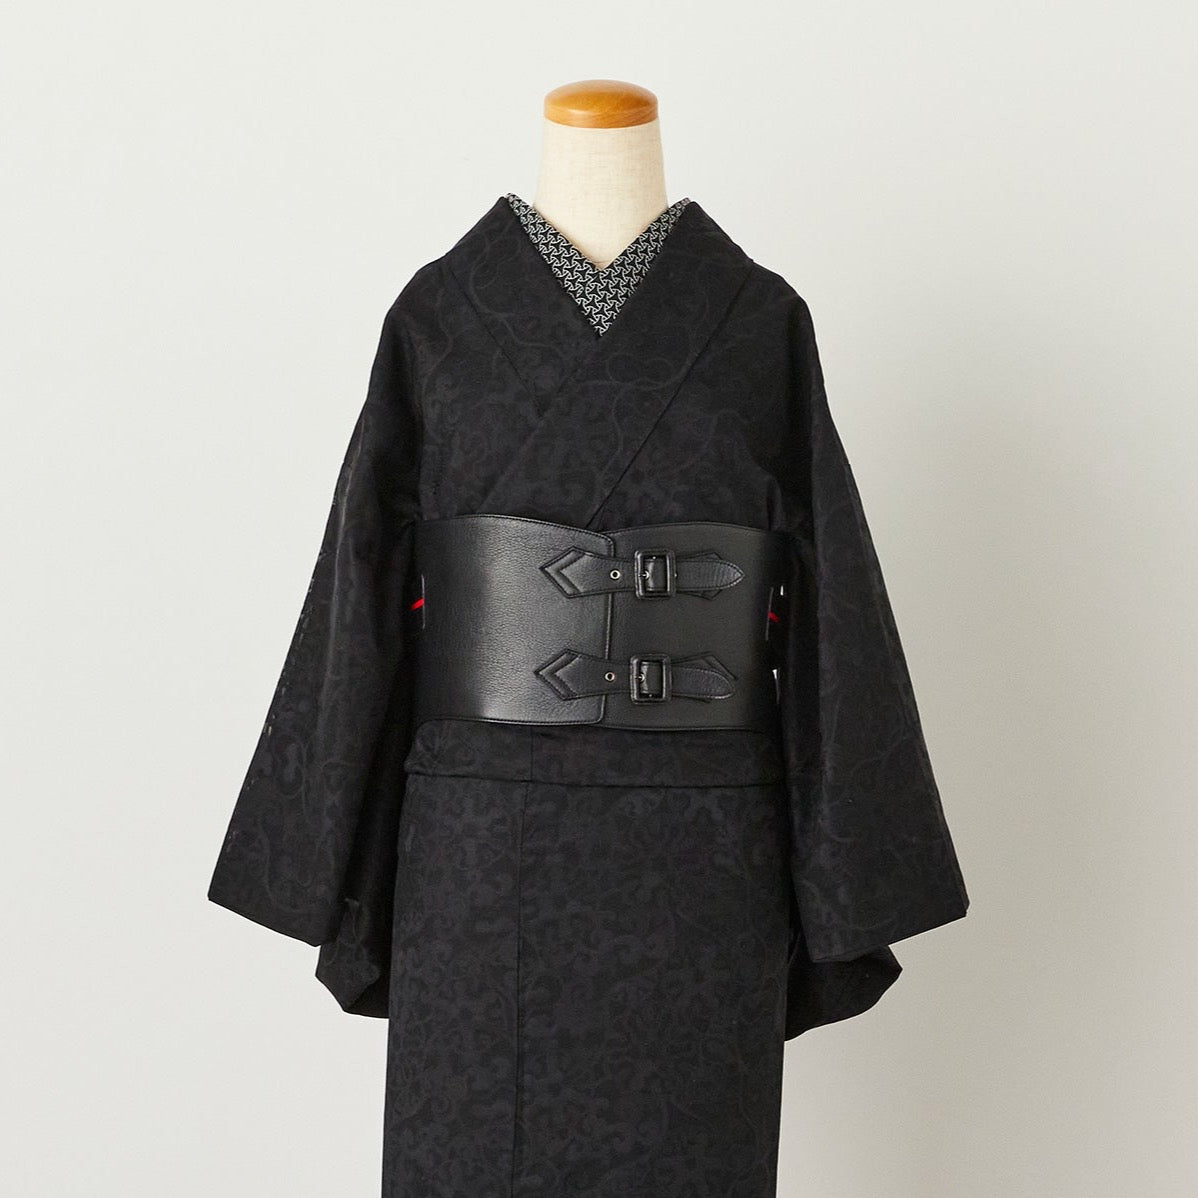 Half-collar "Kumiwaza" Black/White KAPUKI original